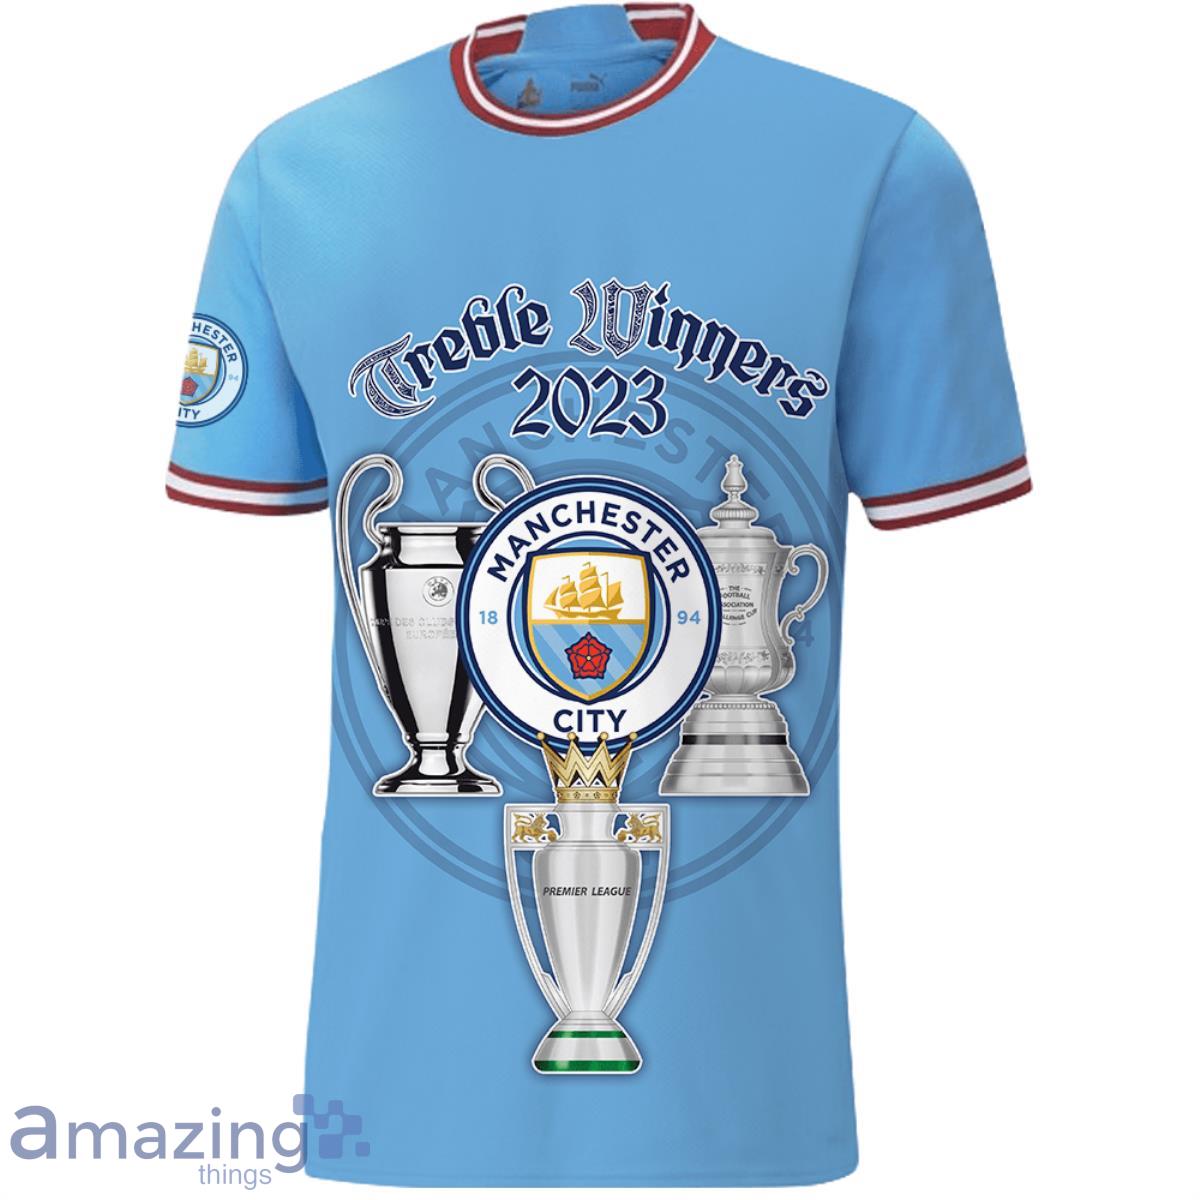 Manchester City The Treble Champions League 2023 Blue Moon Print 3D Shirt For Fans Product Photo 2